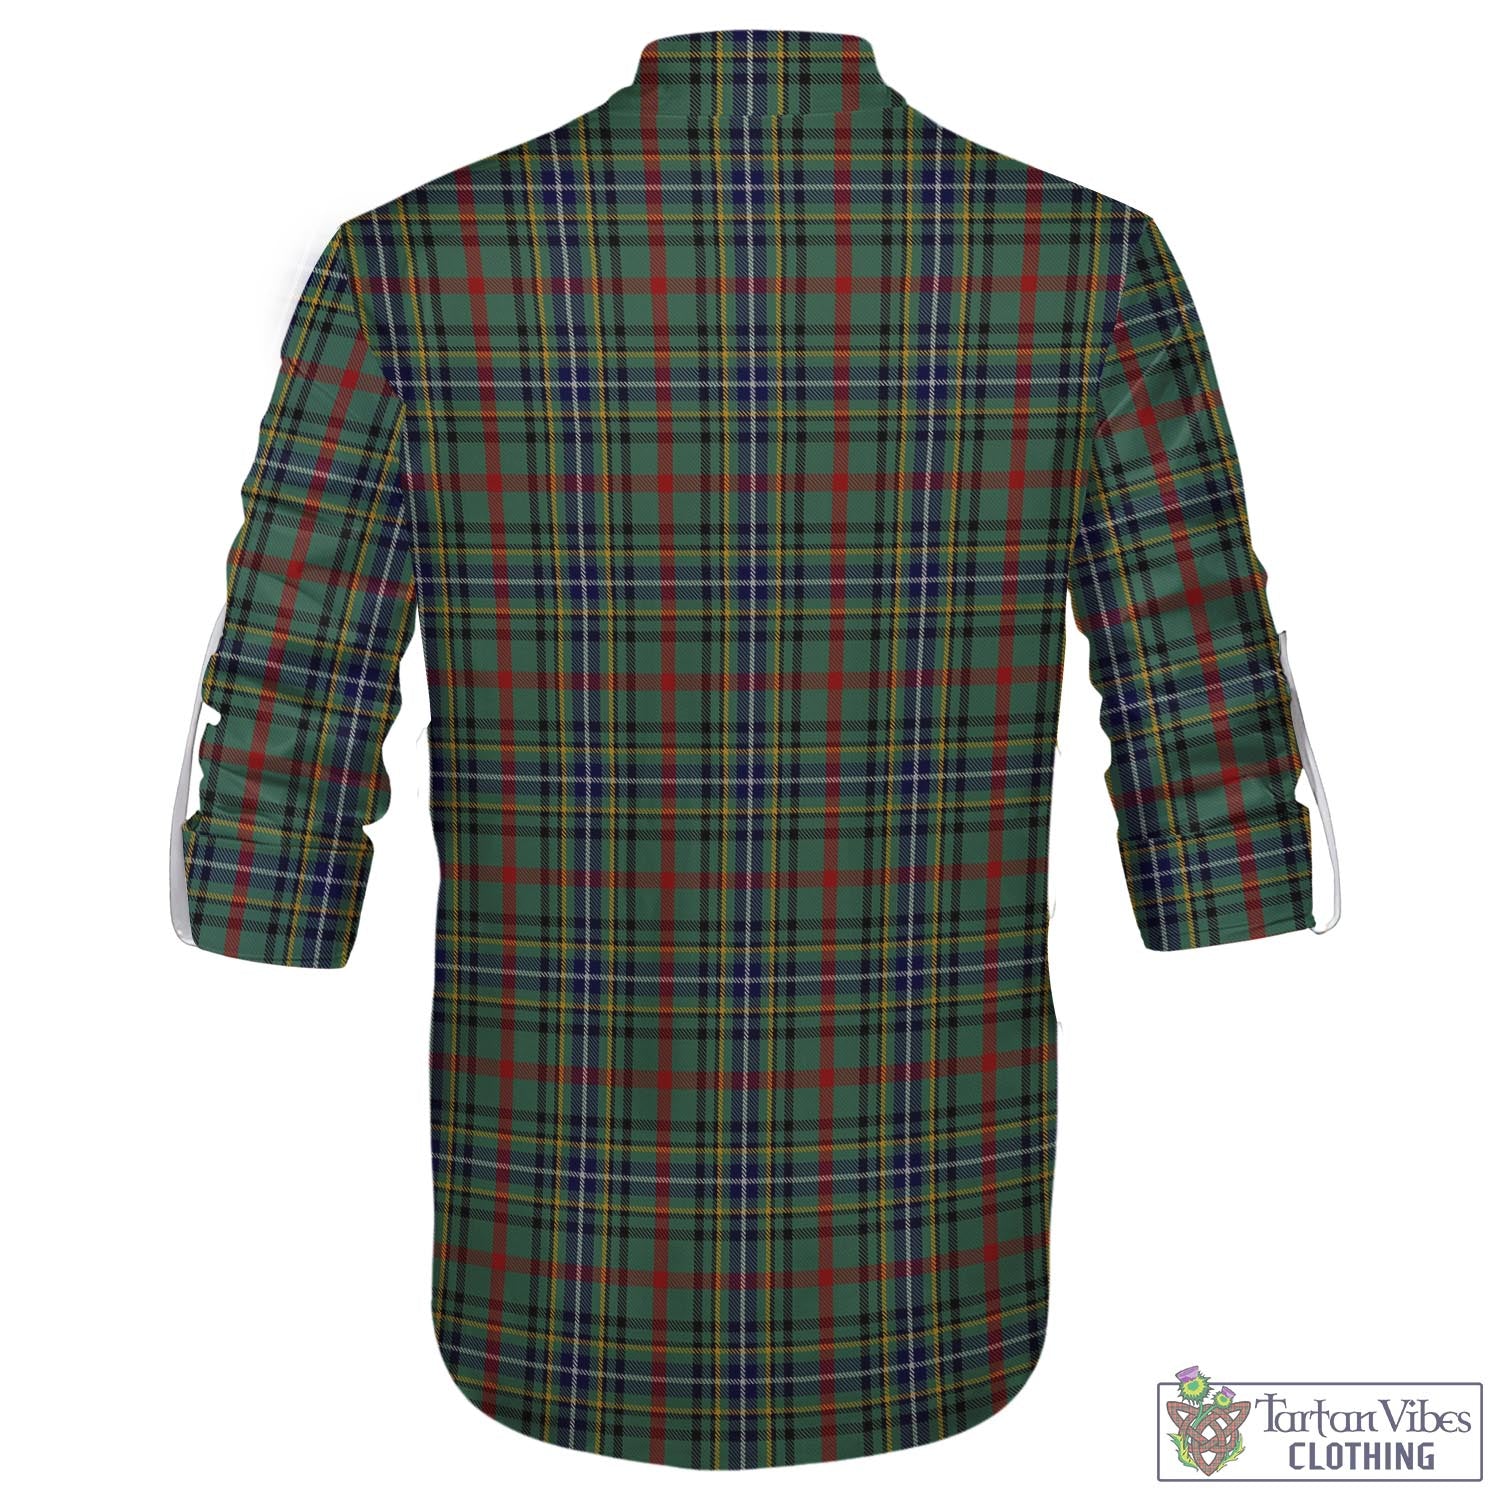 Tartan Vibes Clothing Bisset Tartan Men's Scottish Traditional Jacobite Ghillie Kilt Shirt